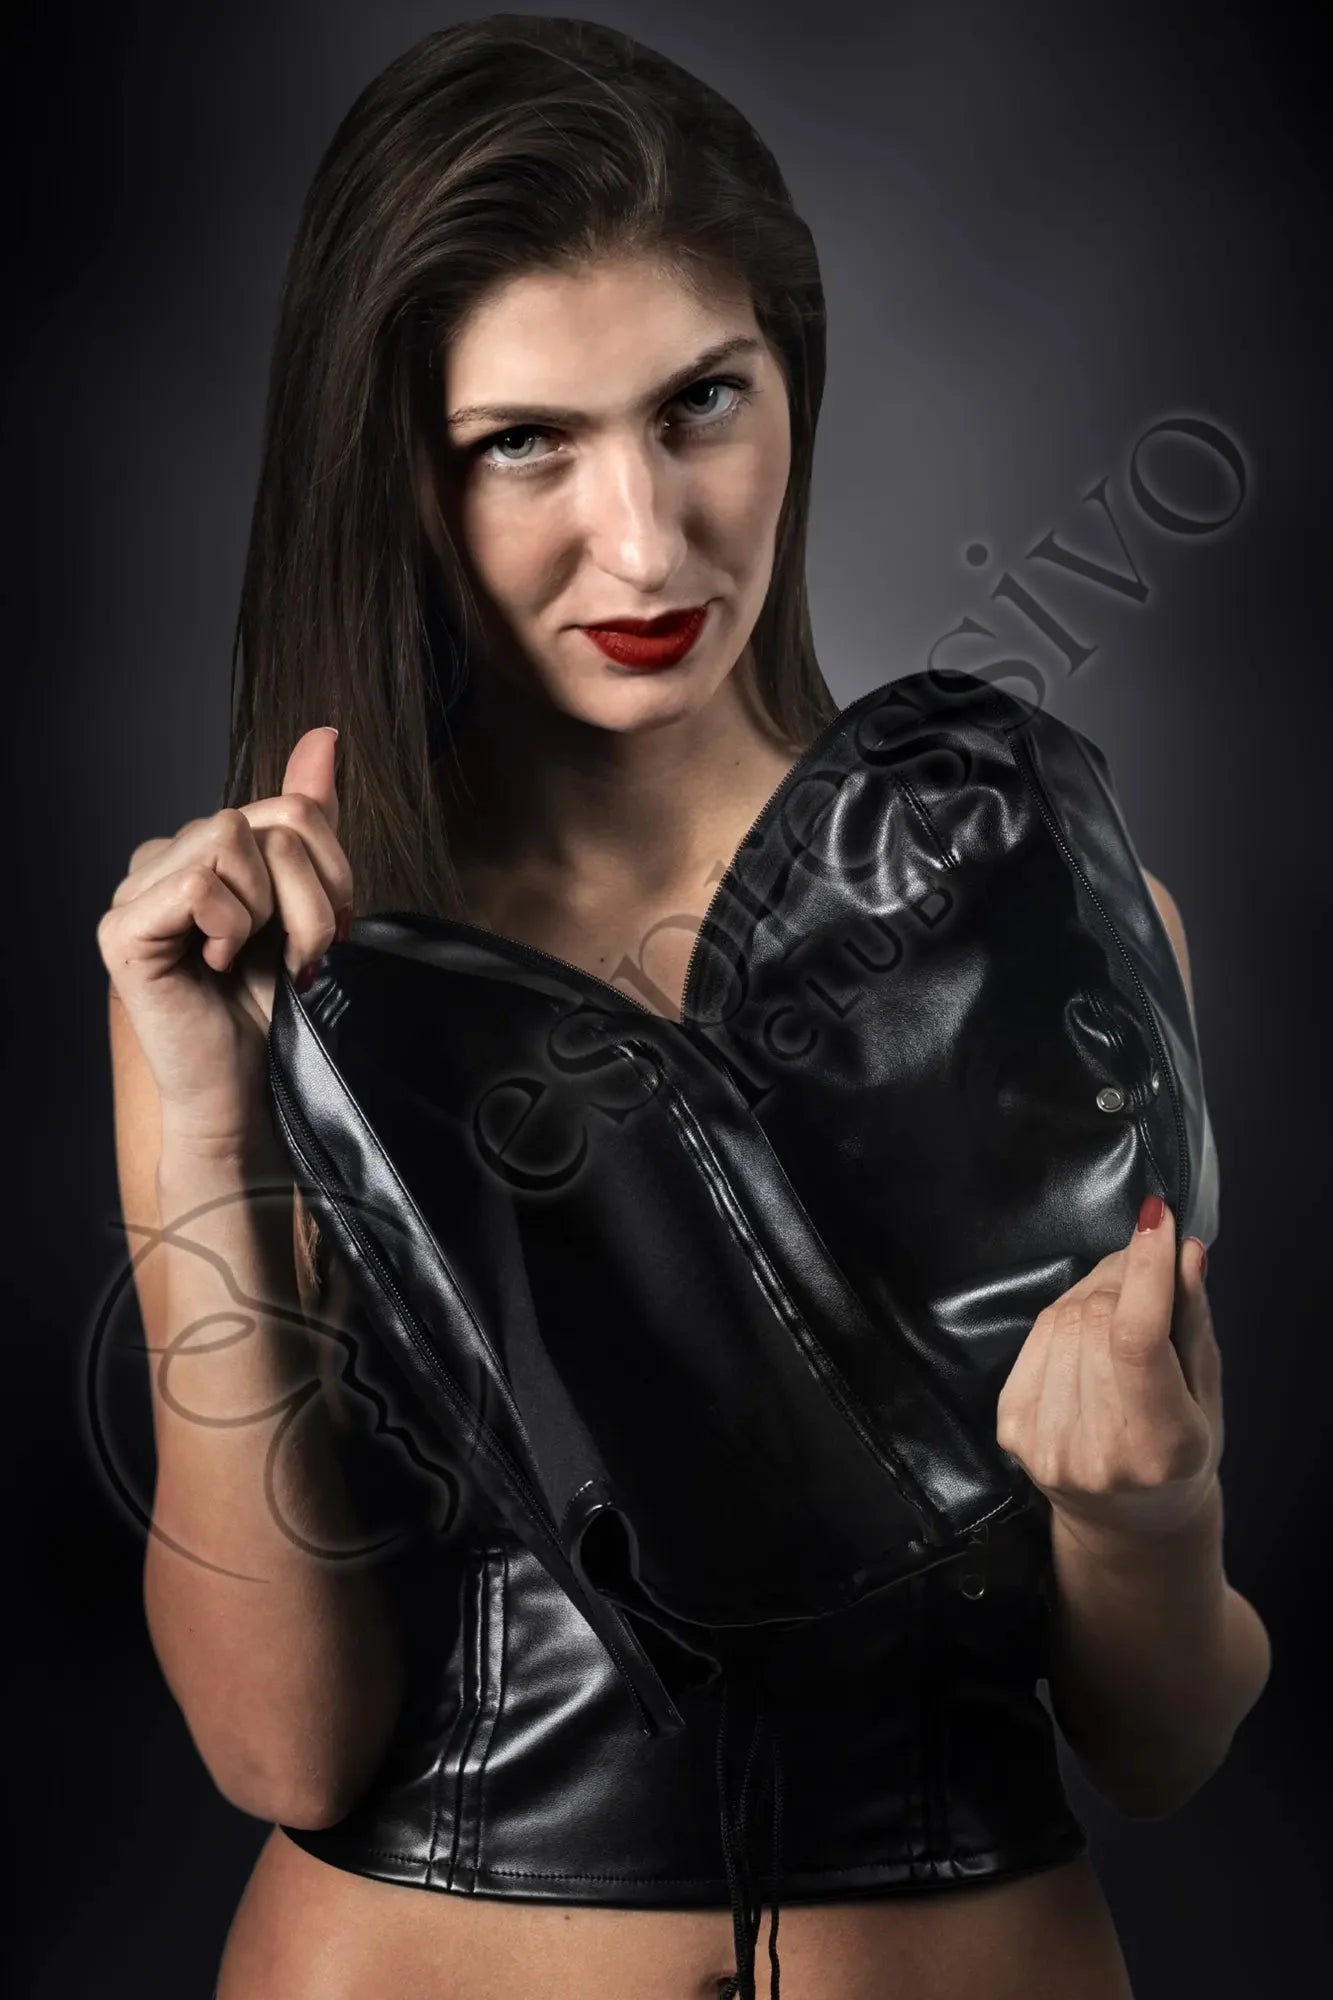 EspressivoClub Black Extreme Bondage Hood For Sensory Deprivation - Leather Lined Masks 190 - 3